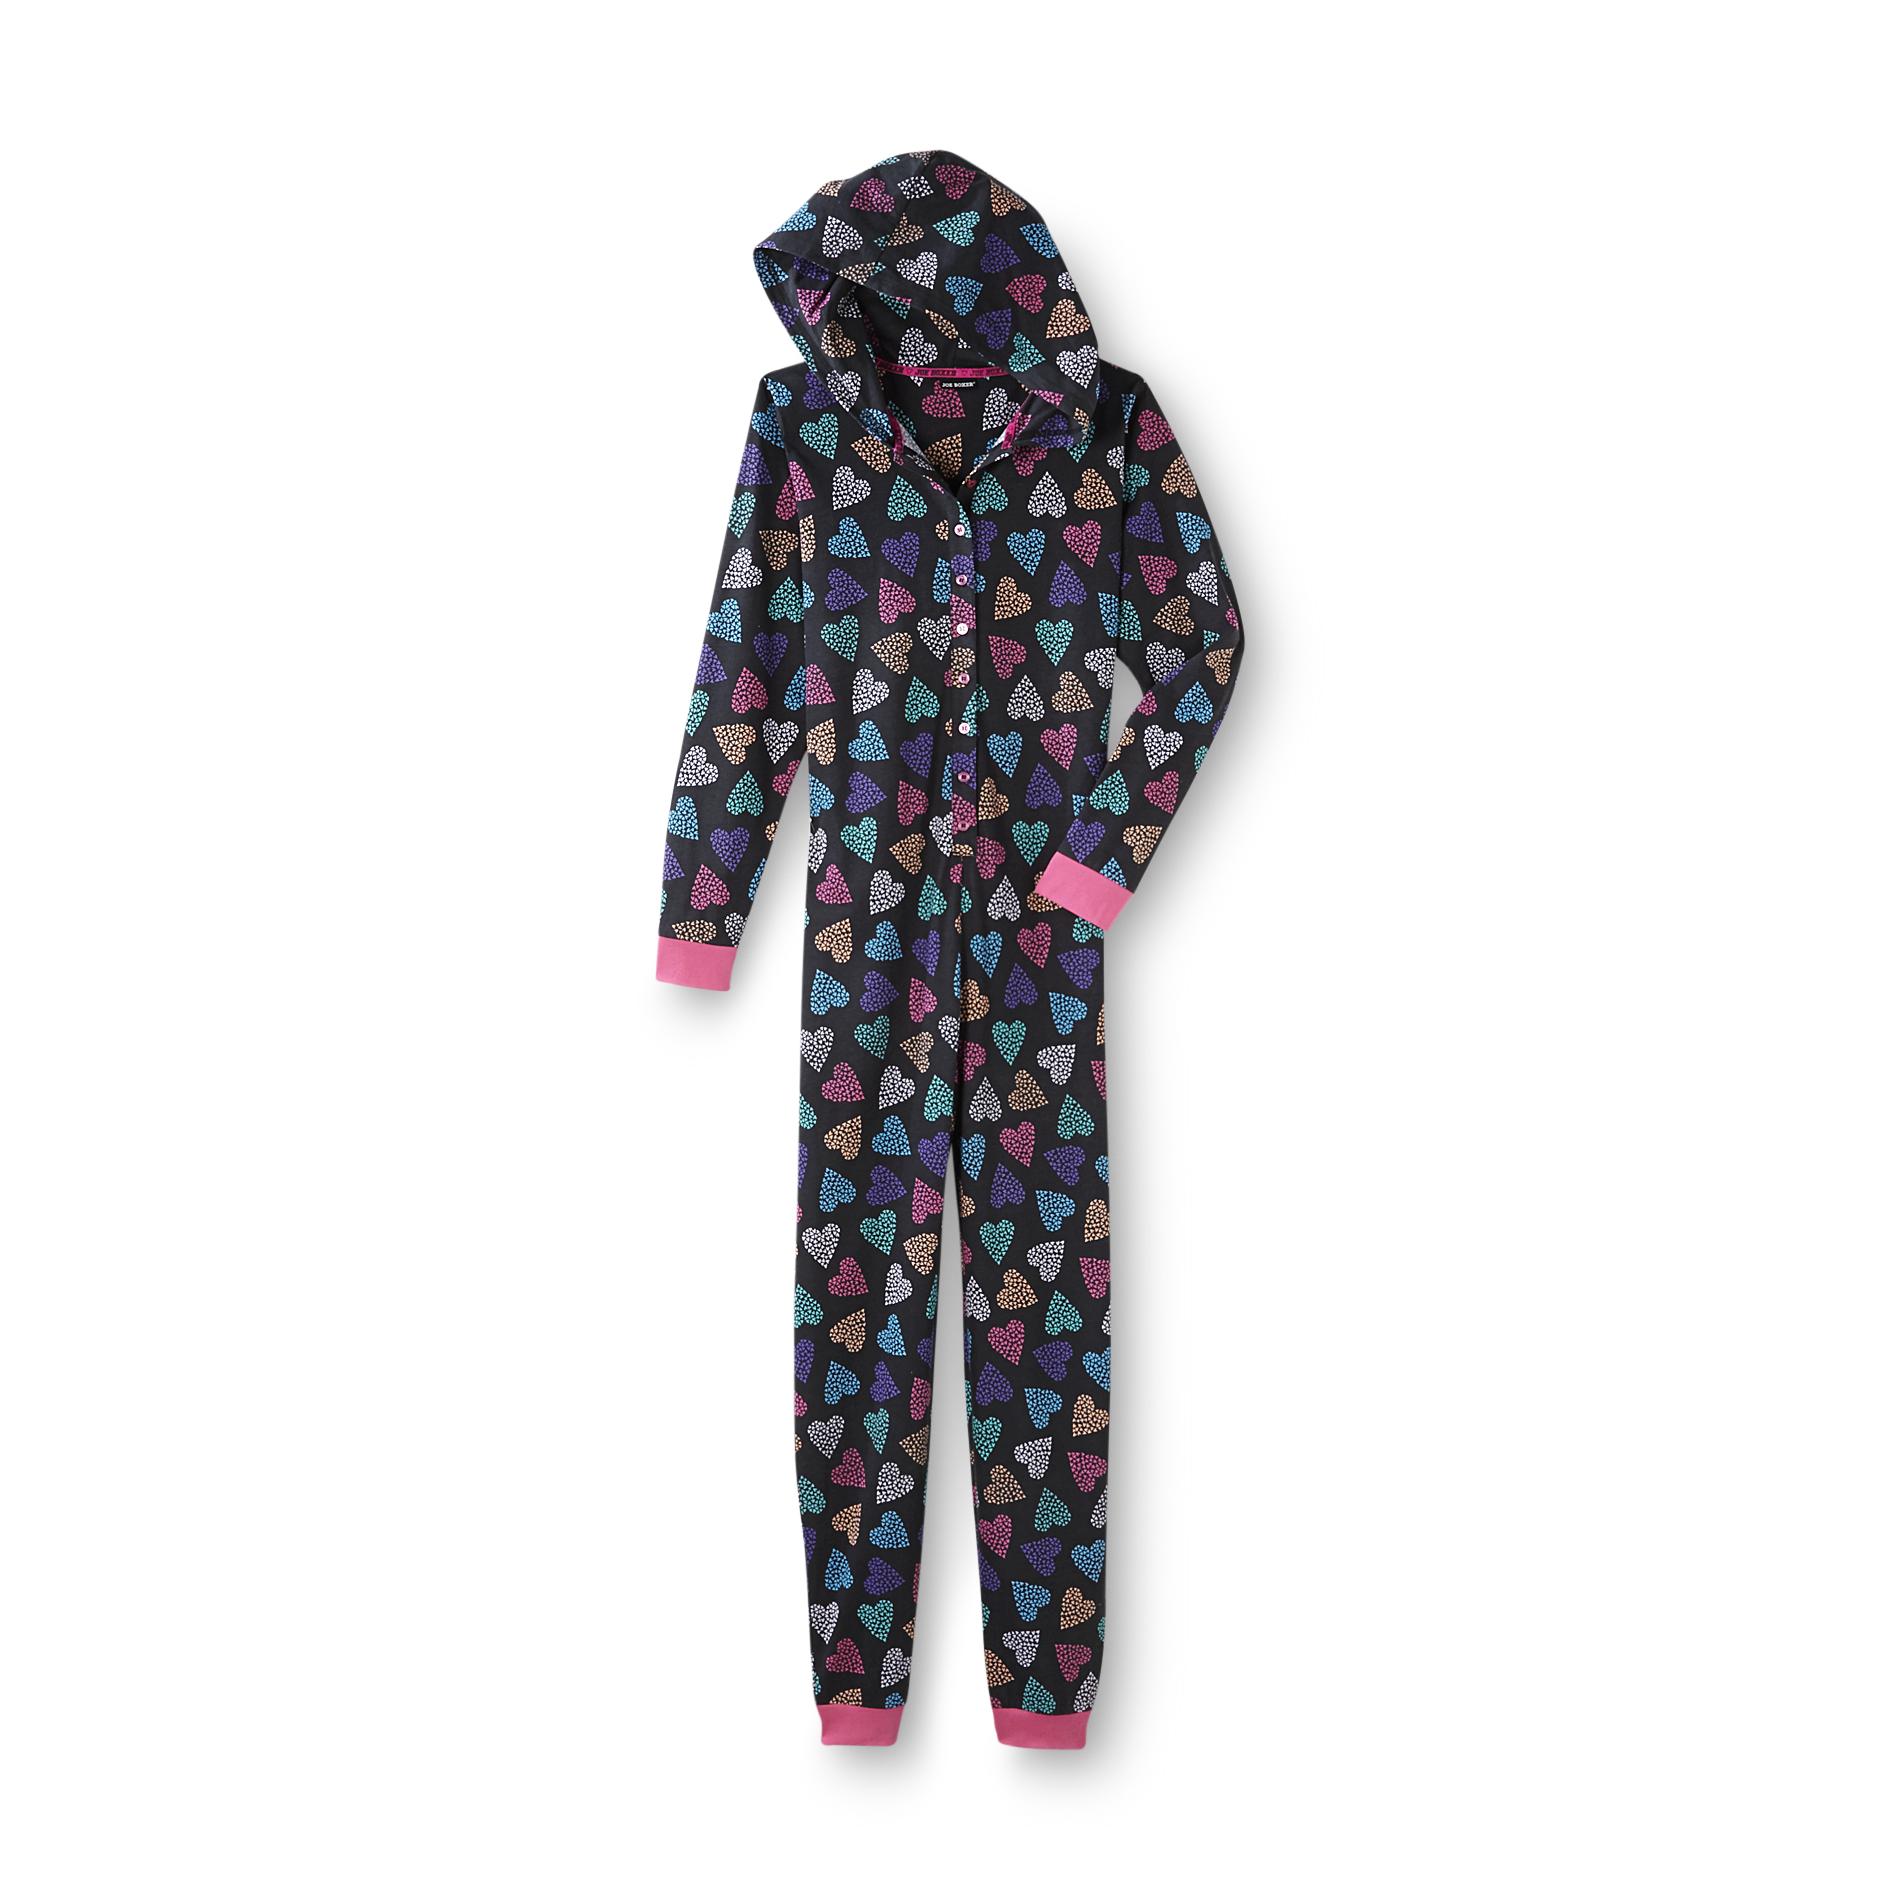 Joe Boxer Women's One-Piece Hooded Pajamas - Heart Print